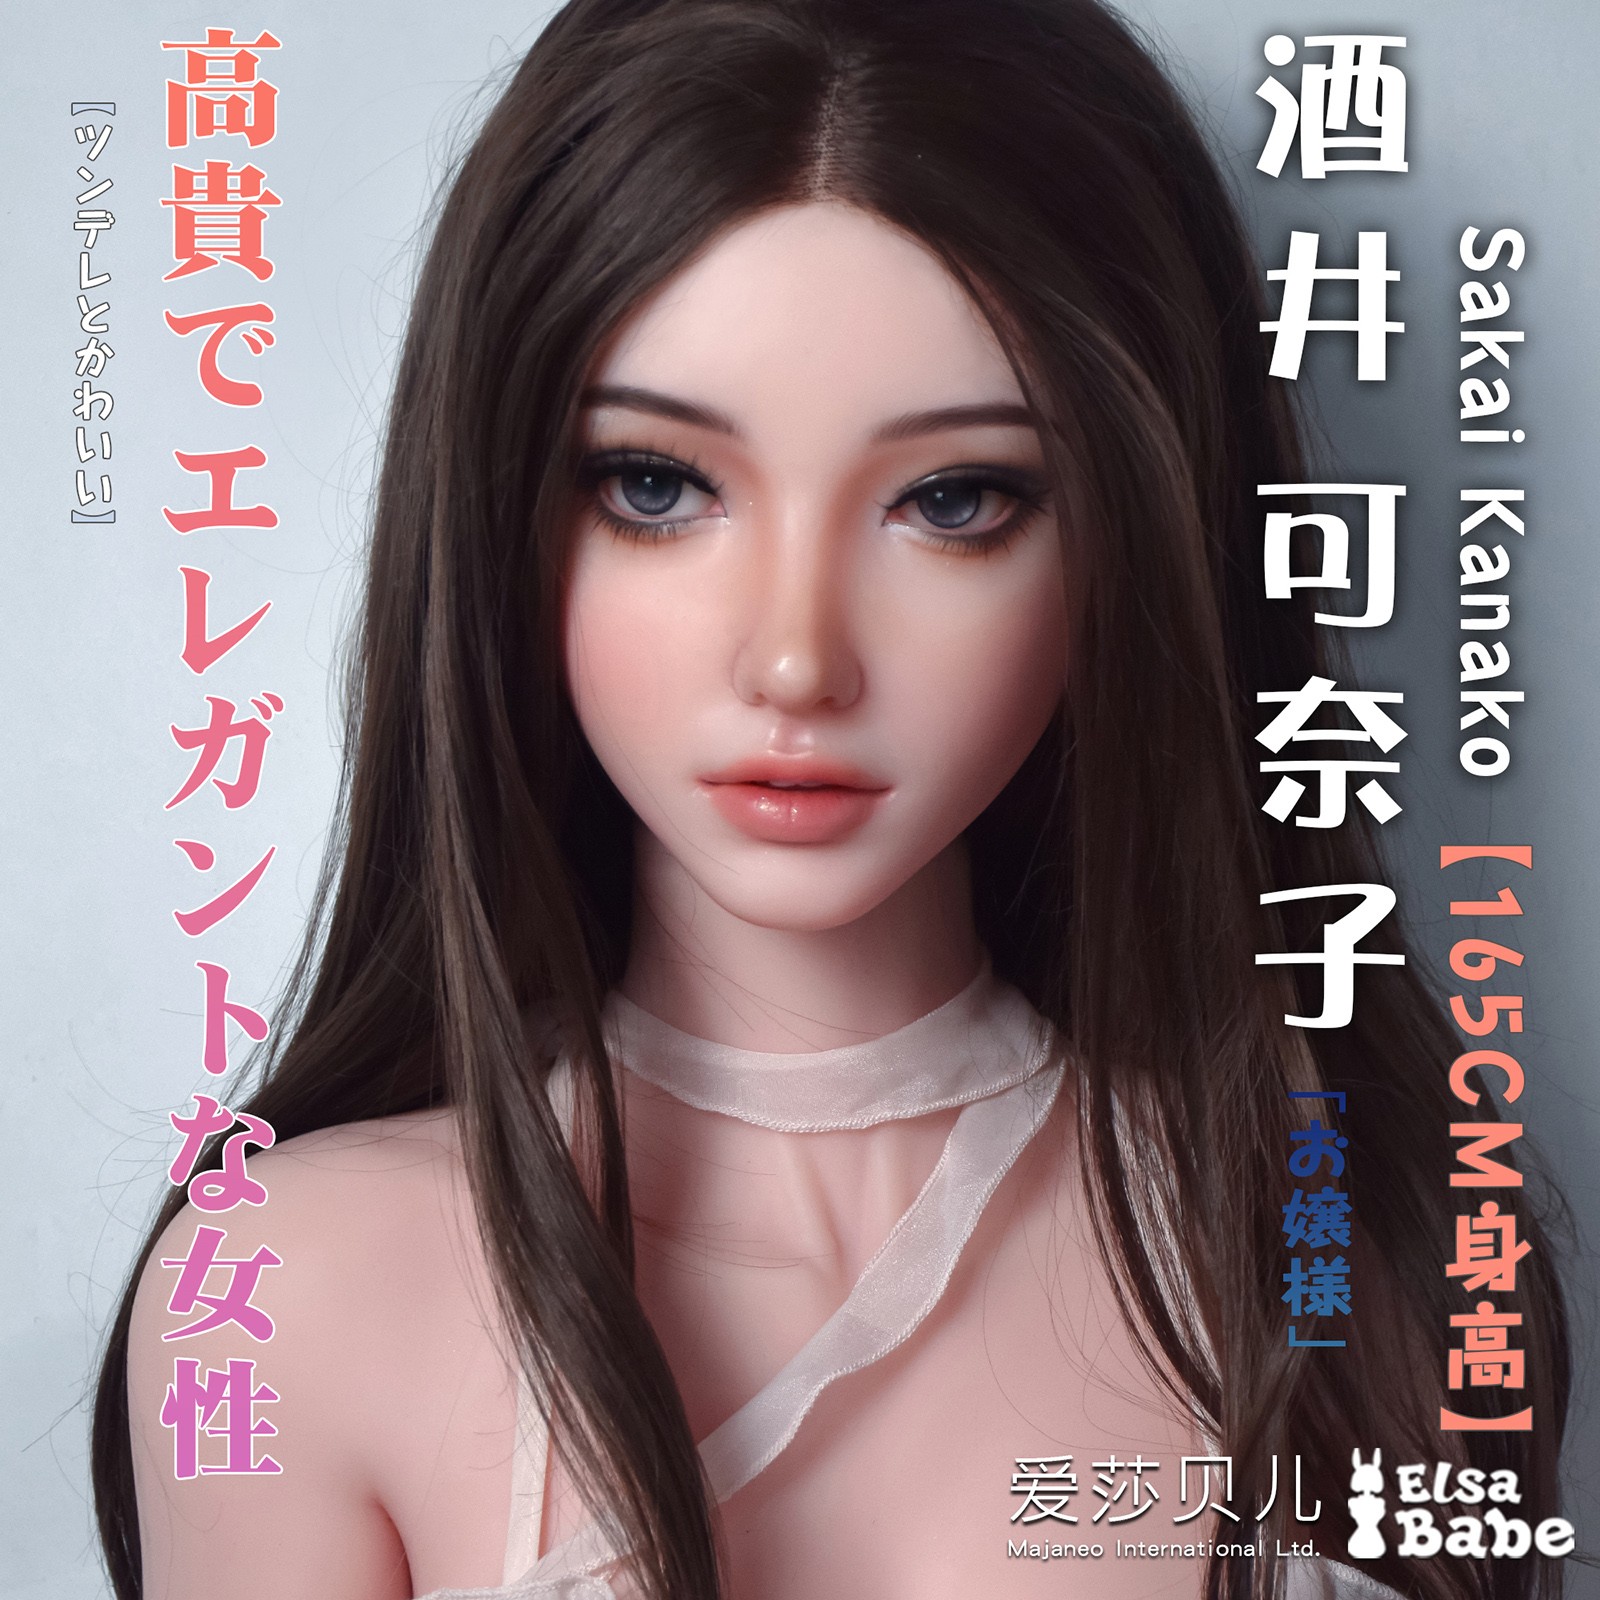 ElsaBabe 165cm Medium Breasts Platinum Silicone Sex Doll Anime Figure Body Real Solid Erotic Toy with Metal Skeleton, Sakai Kanako